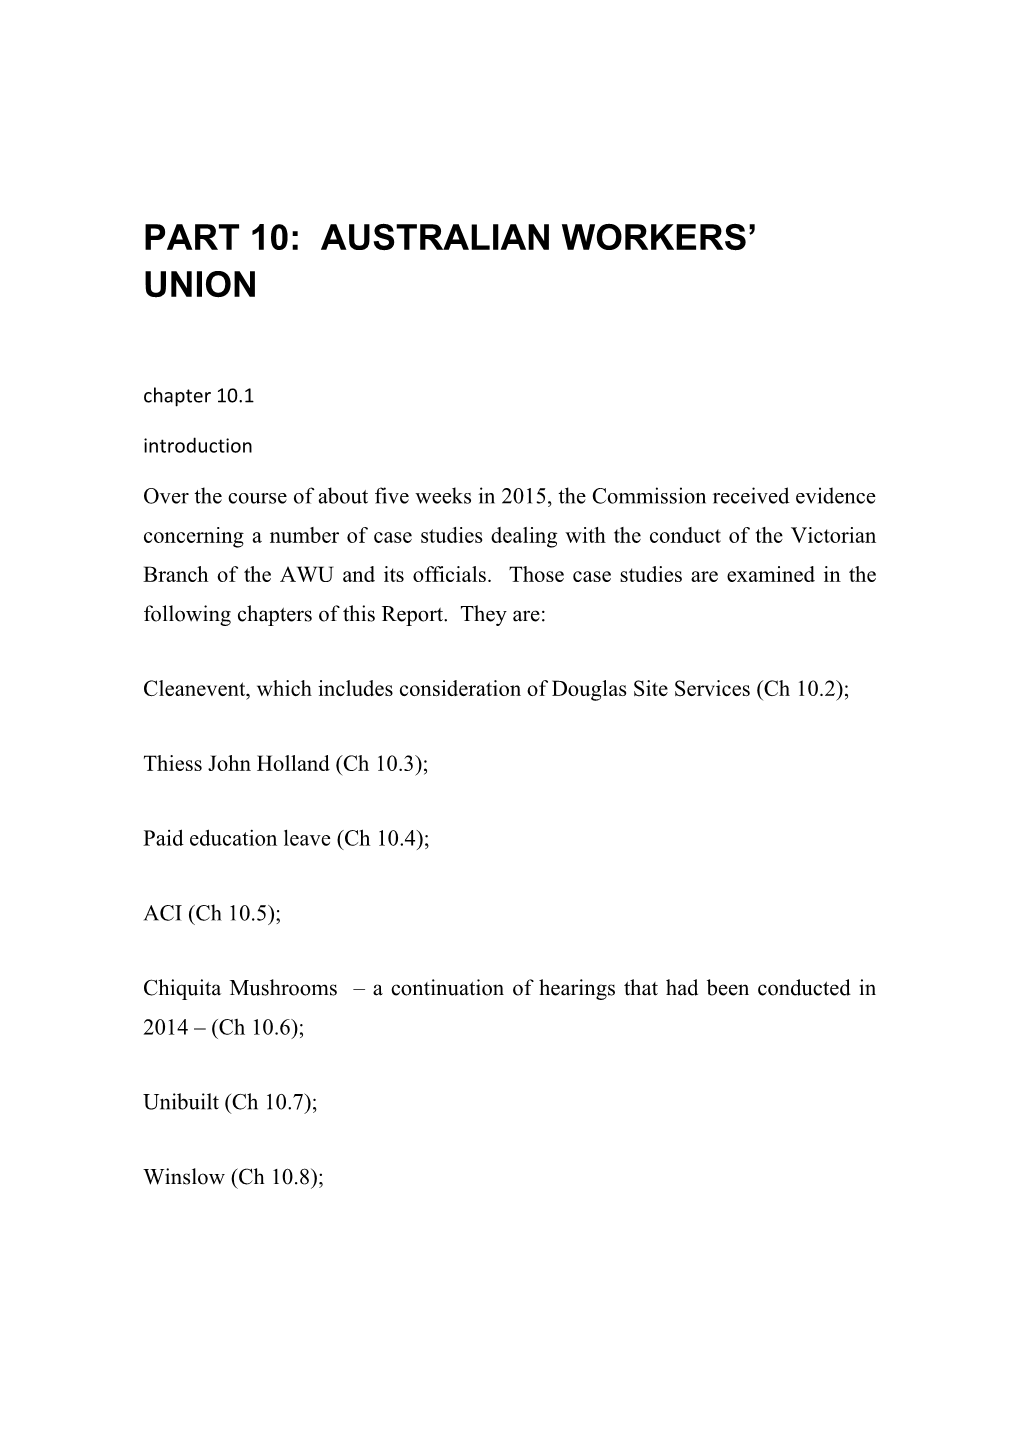 Part 10: Australian Workers Union